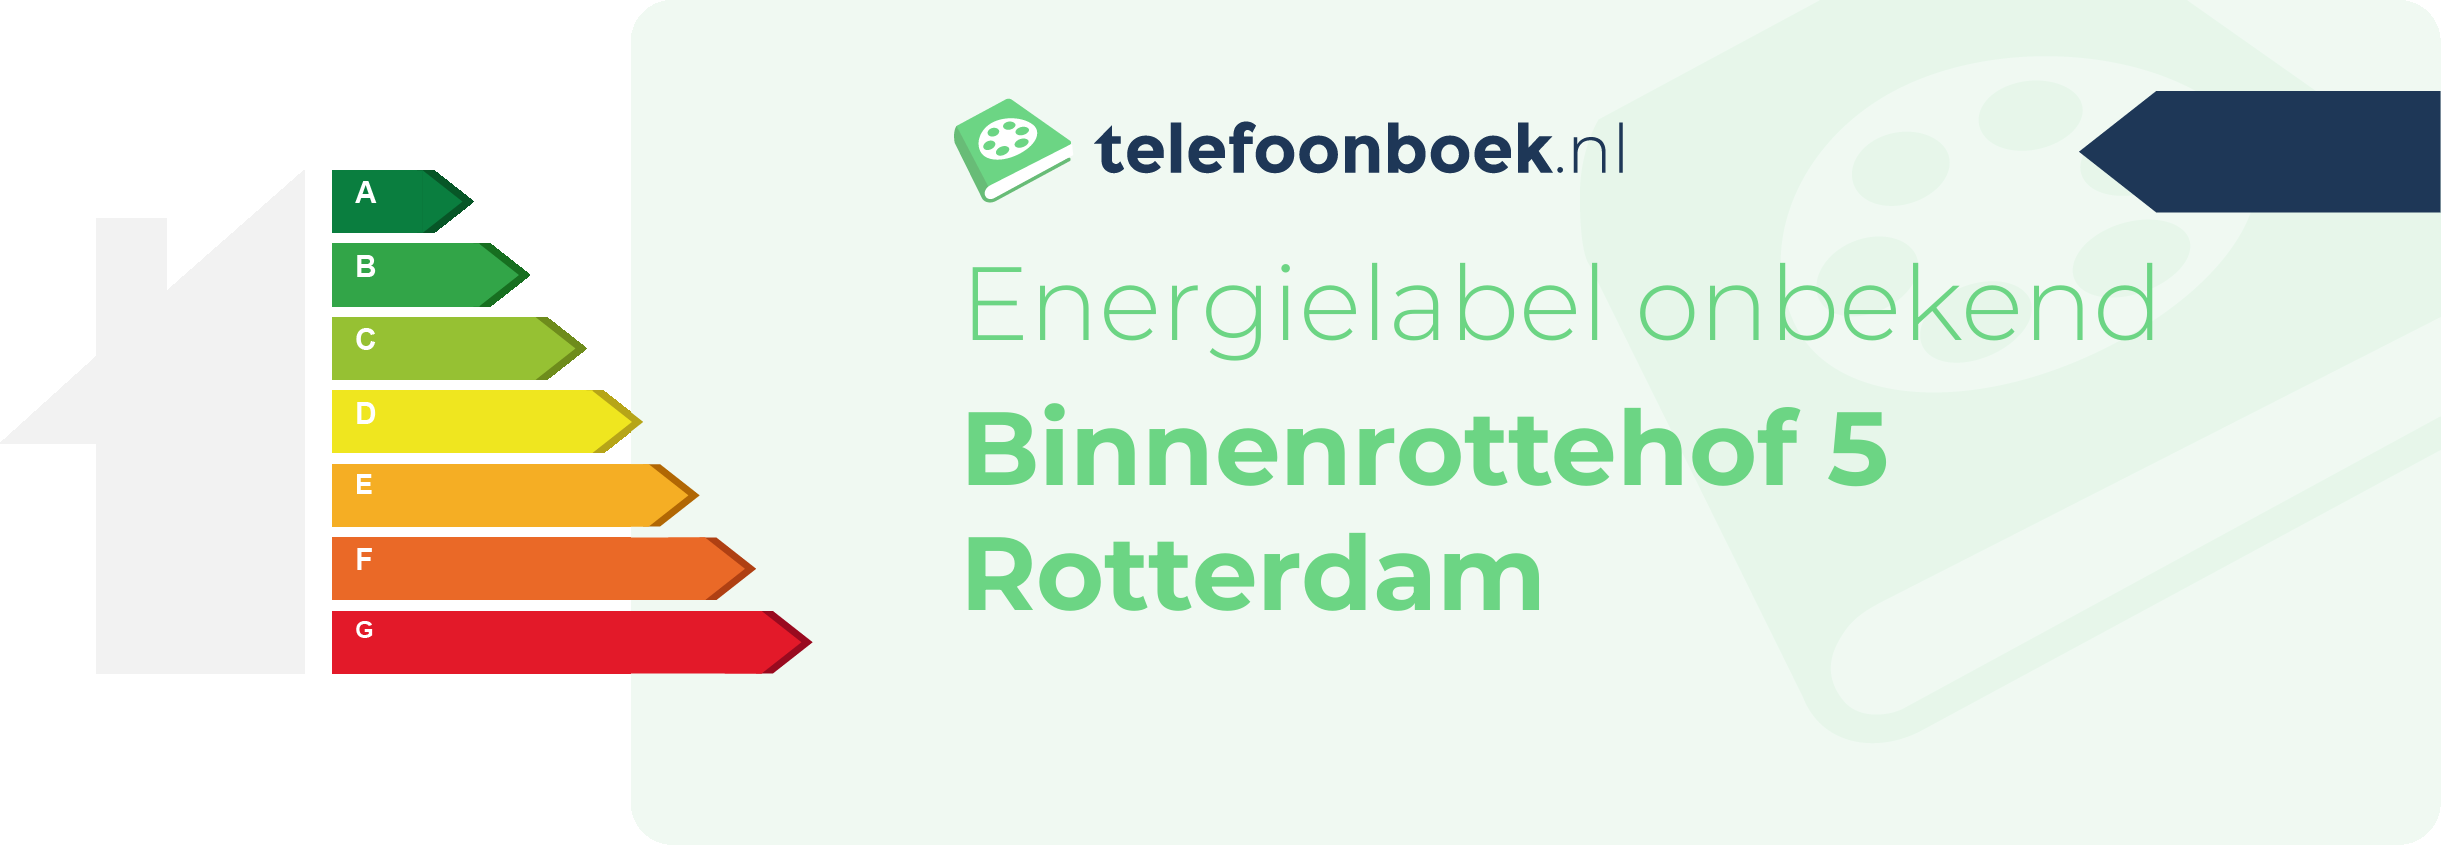 Energielabel Binnenrottehof 5 Rotterdam